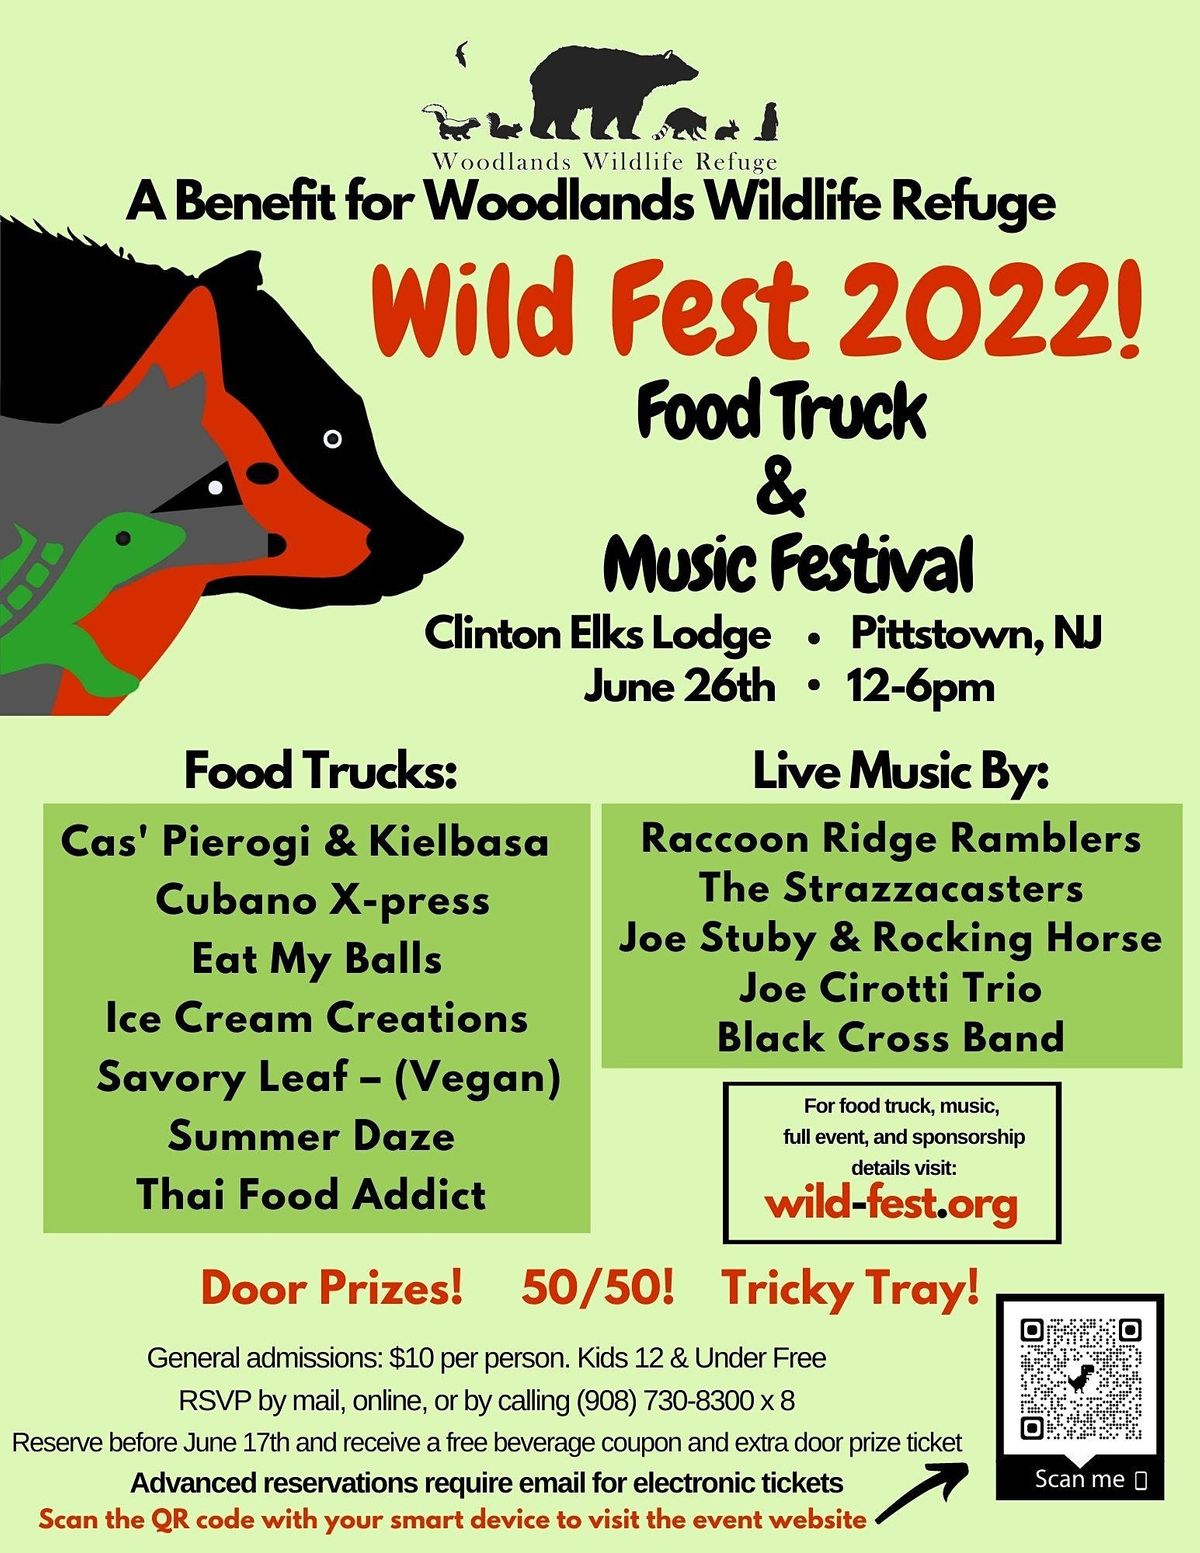 Wild Fest 2022 Food Truck & Music Festival to benefit Woodlands Wildlife Clinton Elks Lodge